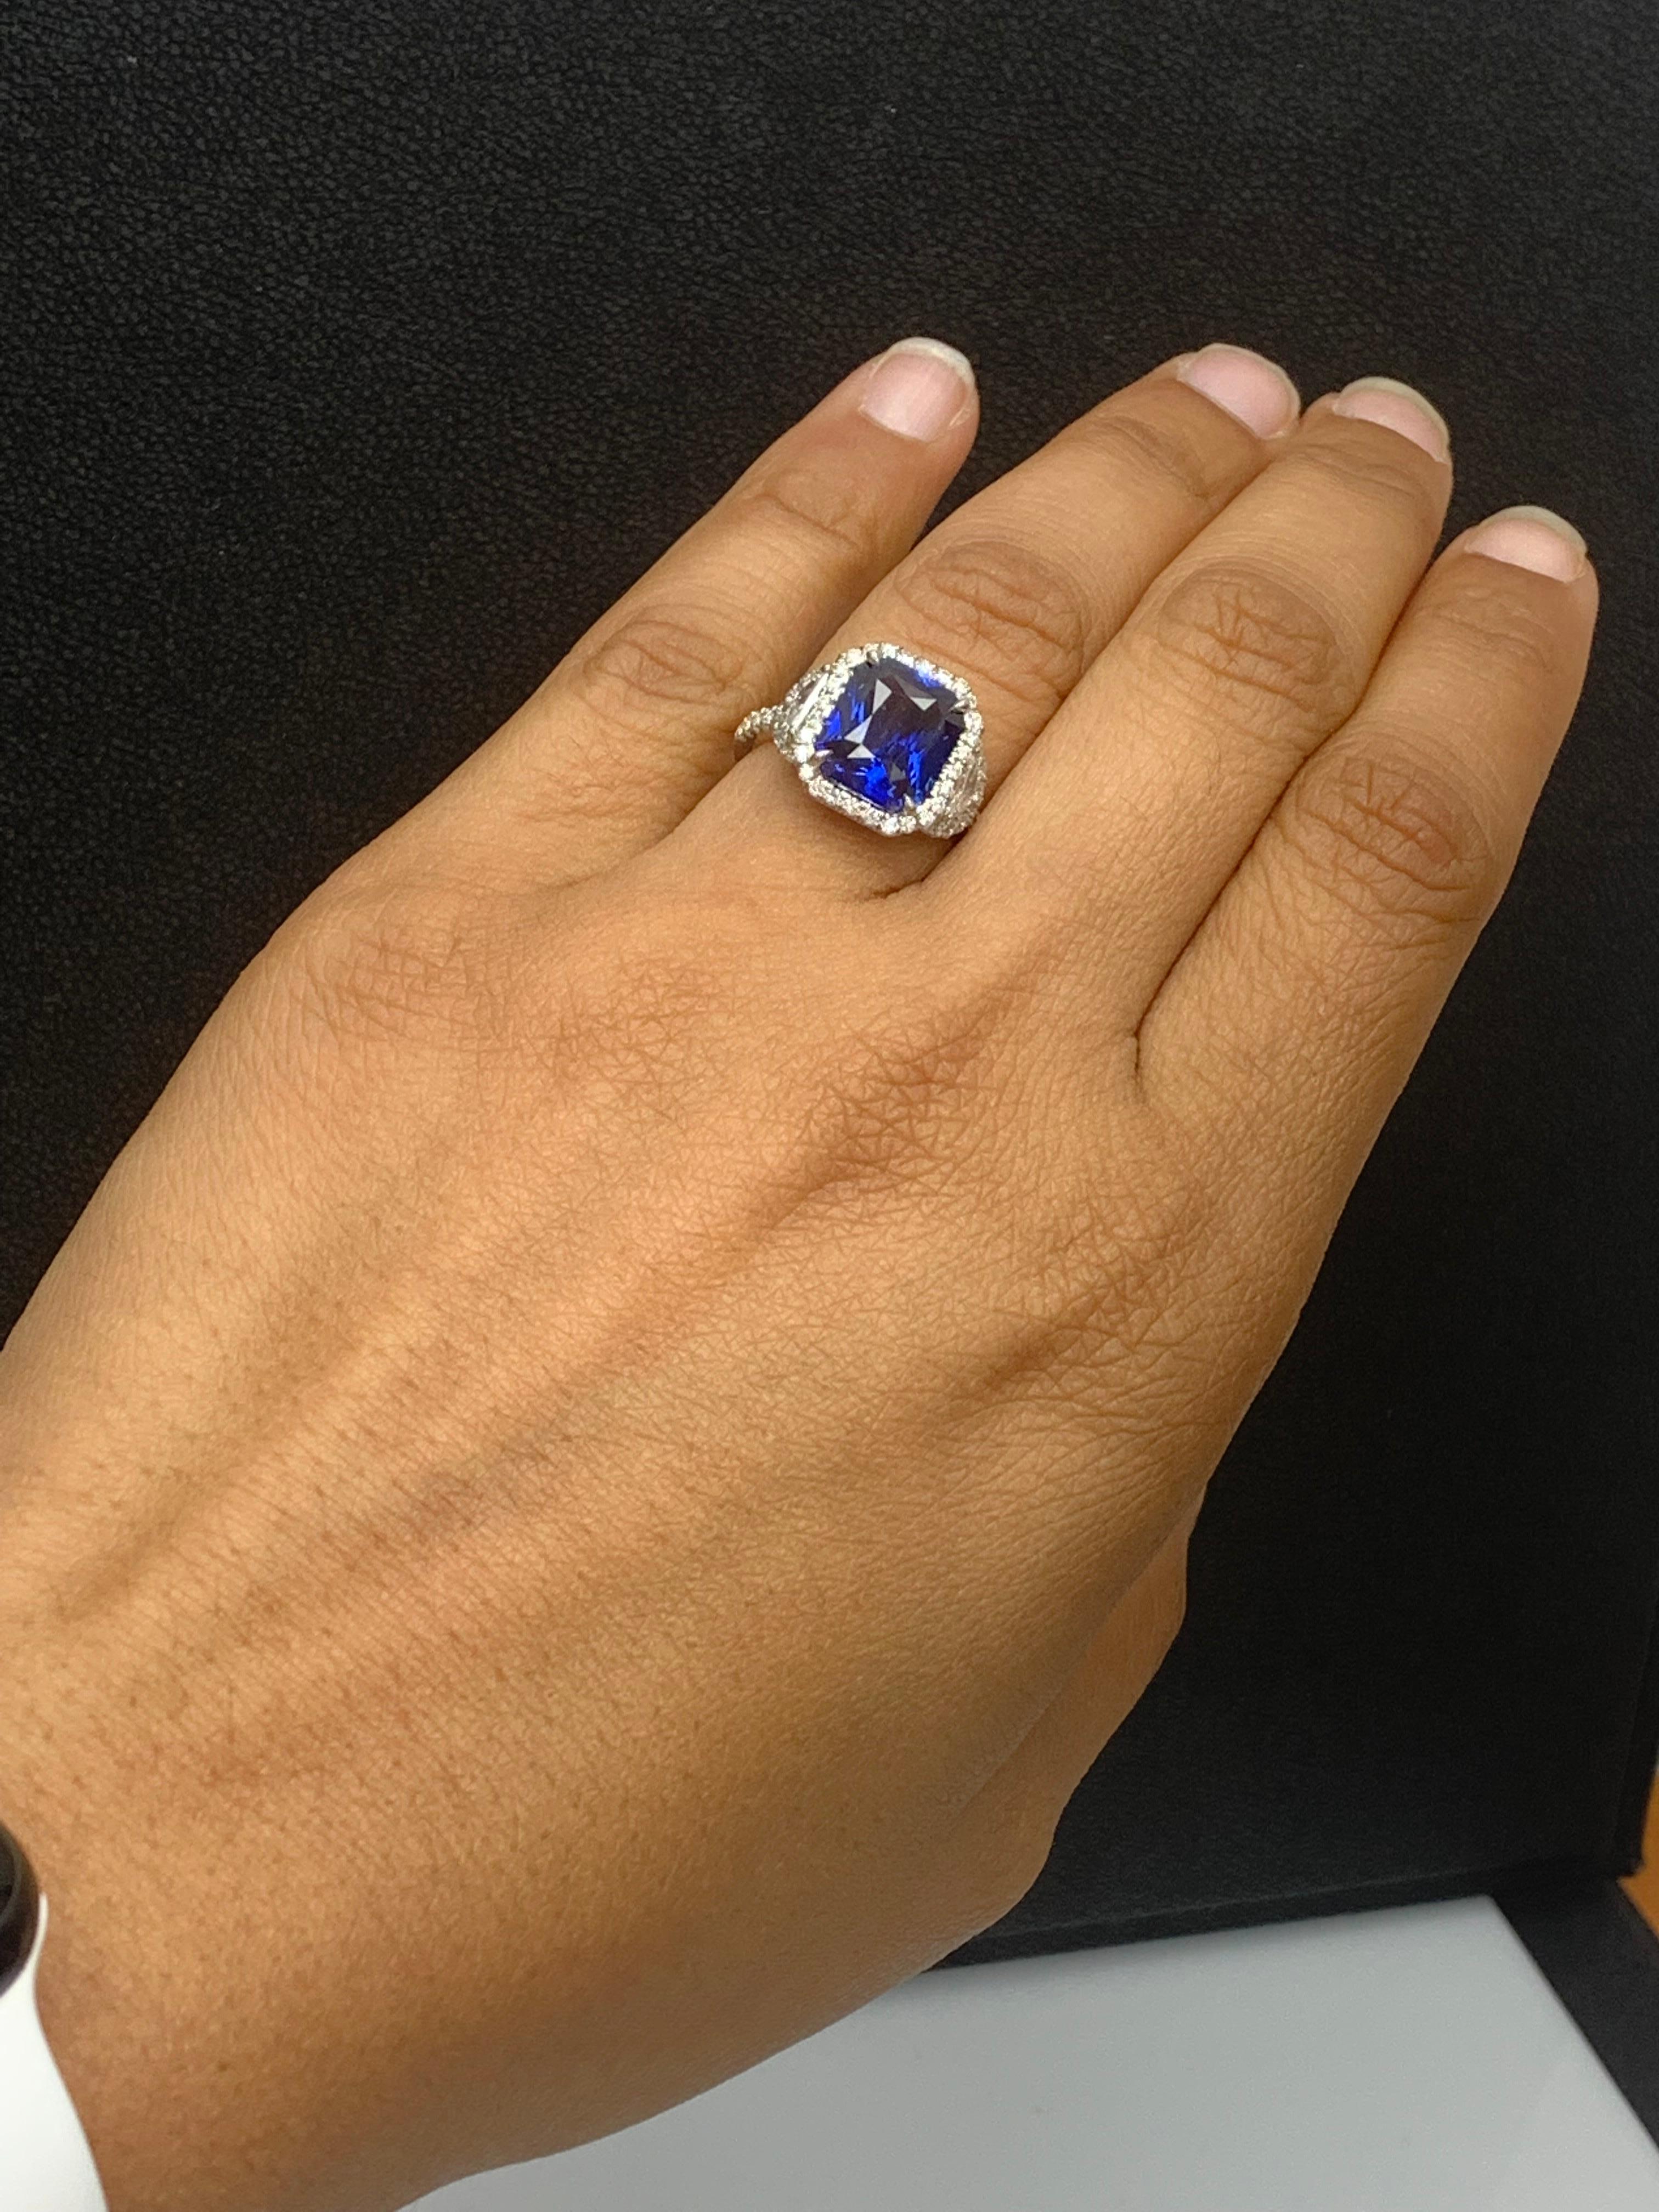 GIA Certified 4.41 Carat Emerald Cut Sapphire Diamond 3 Stone Ring in Platinum For Sale 4